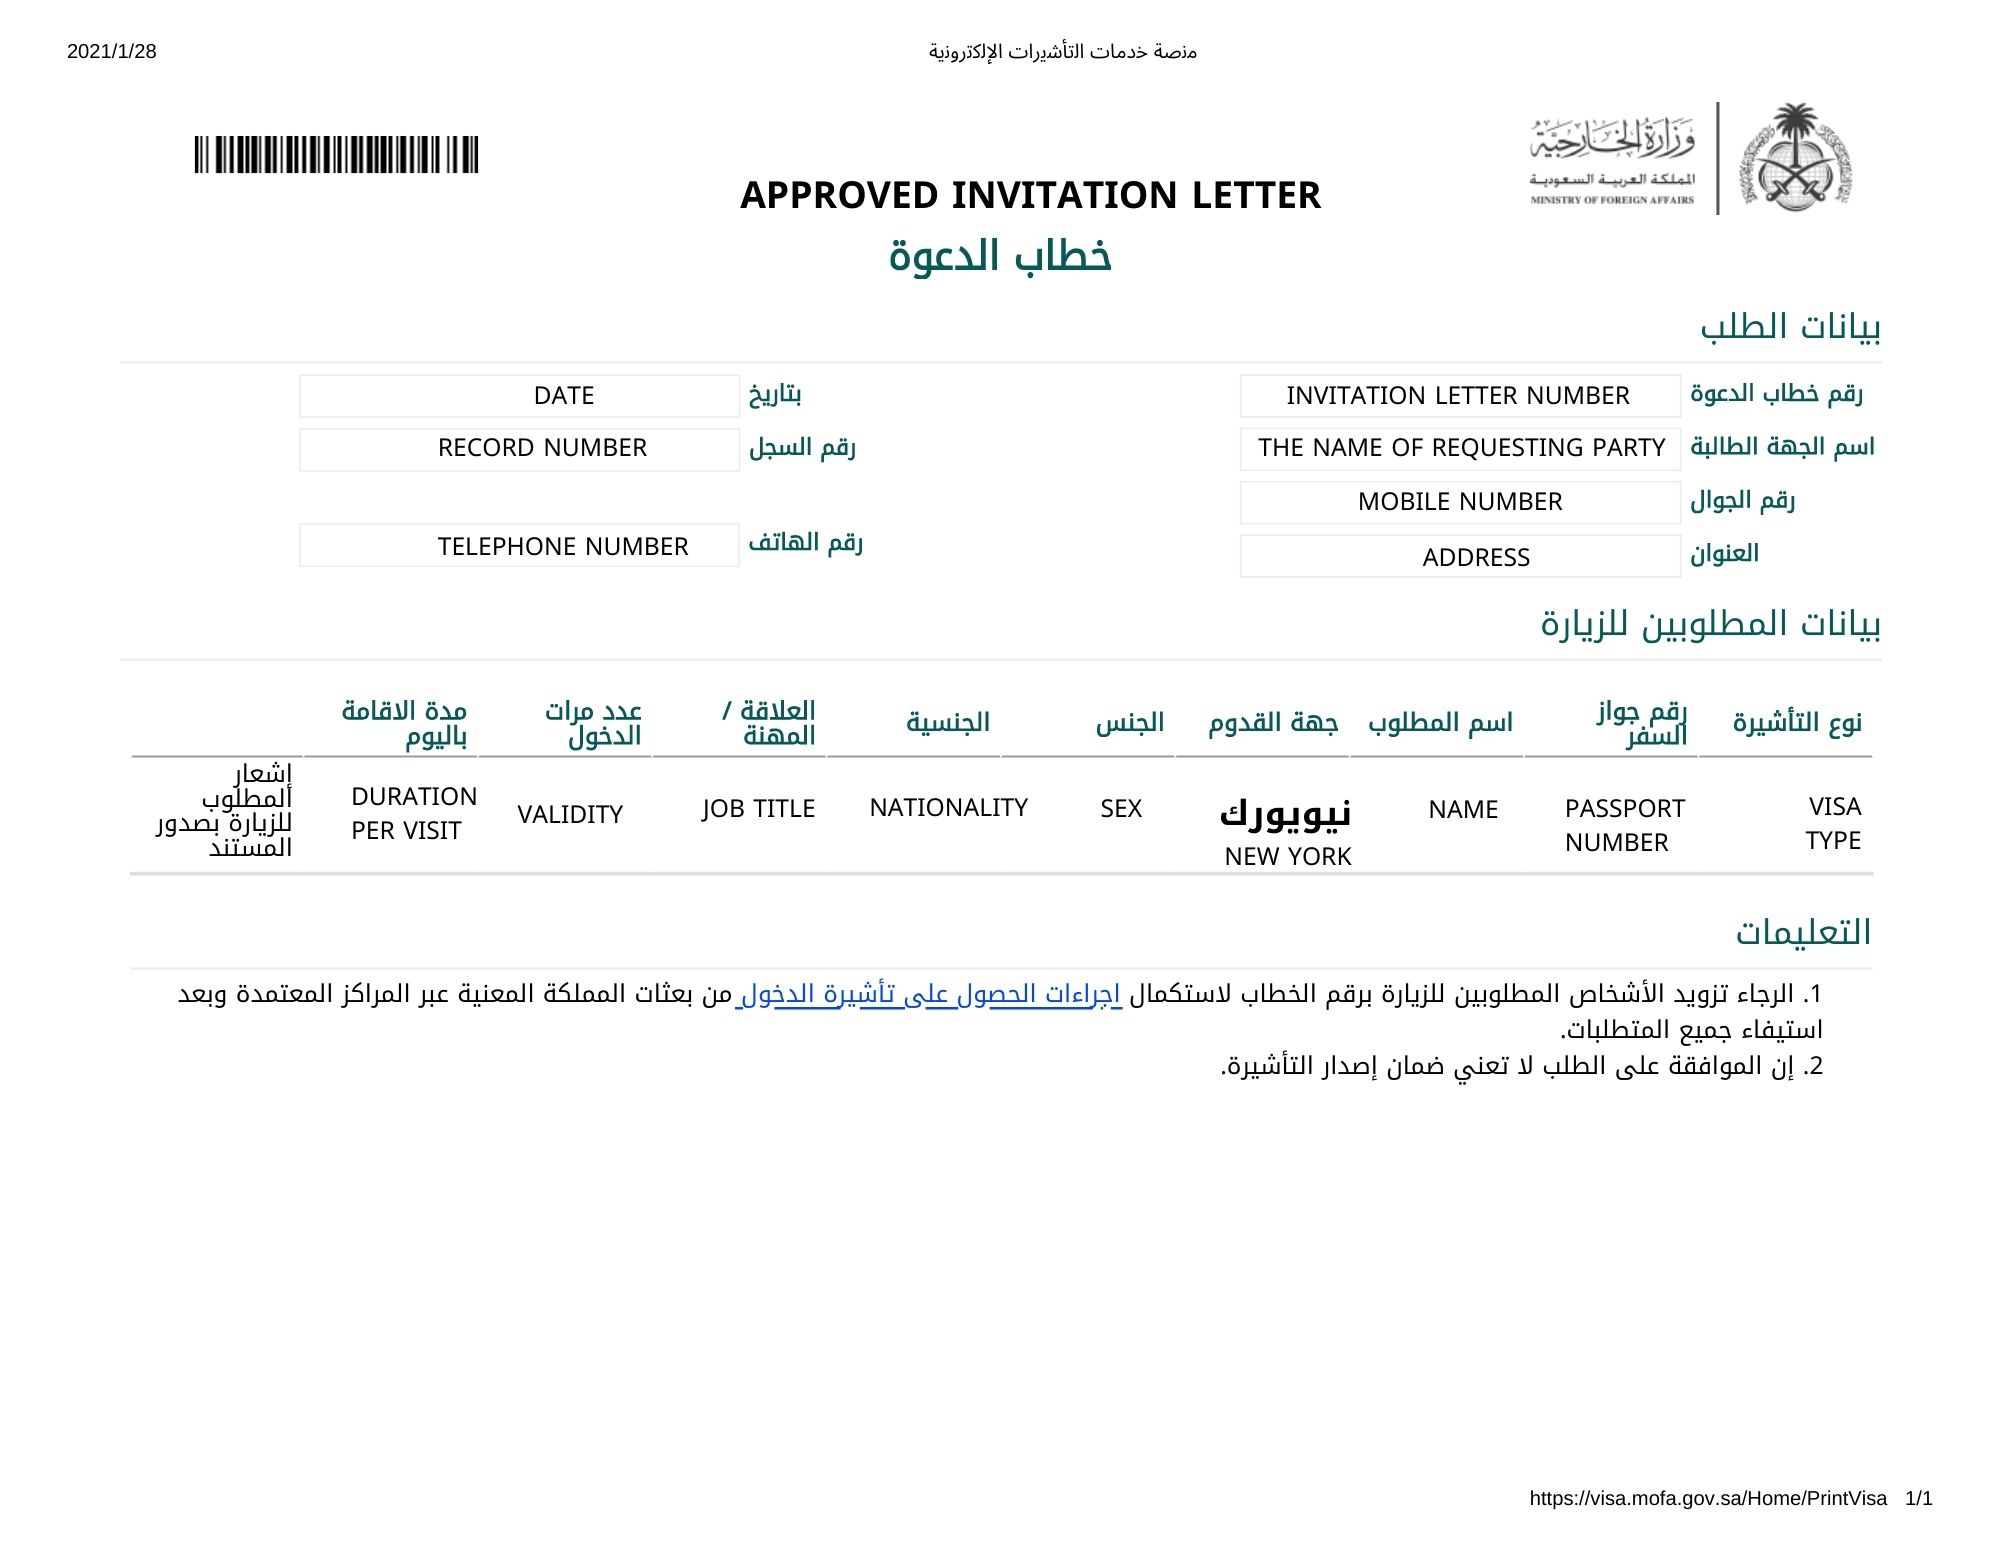 tunisia visit visa from saudi arabia